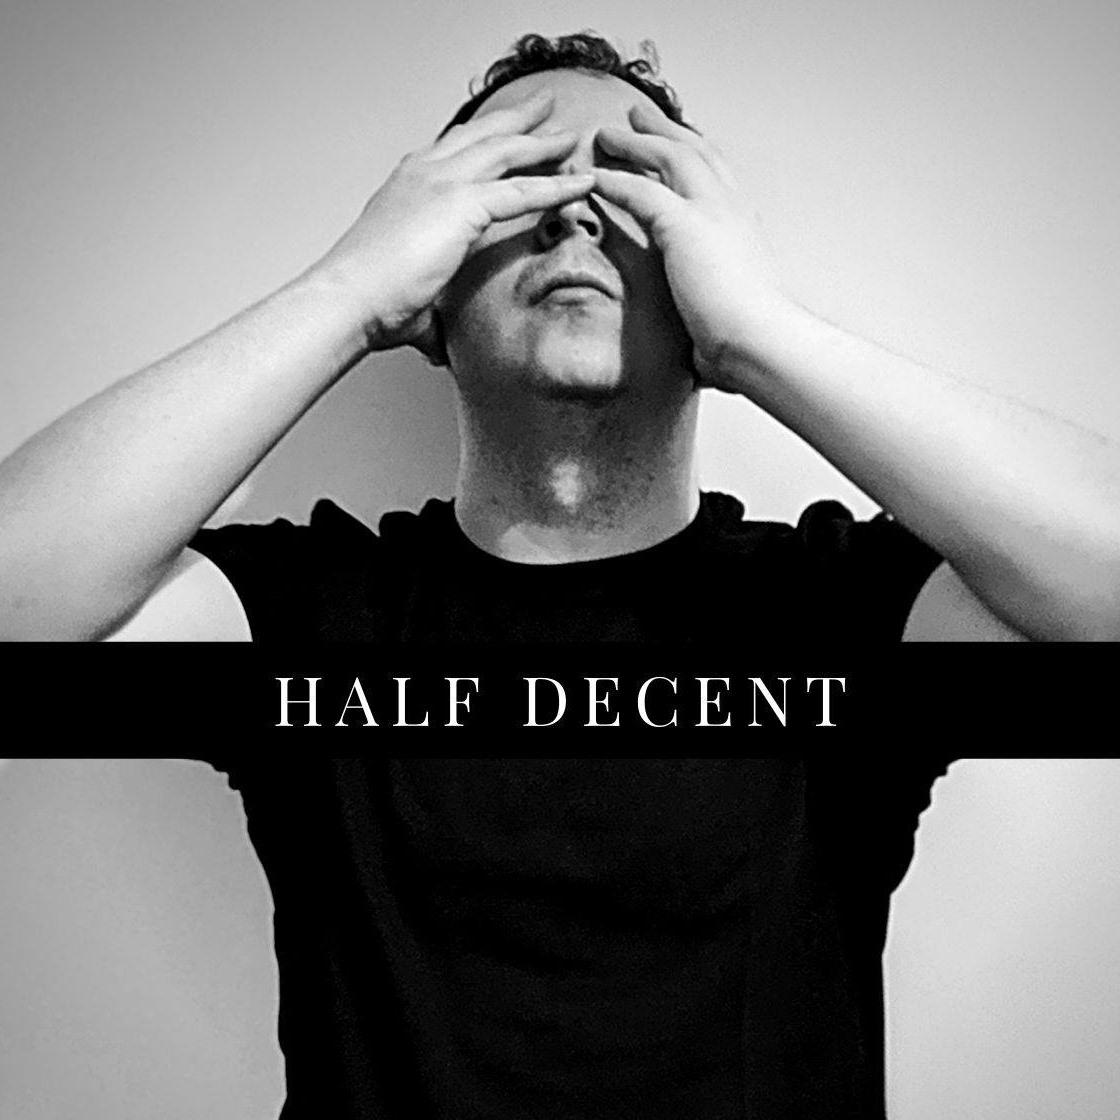 Half Decent